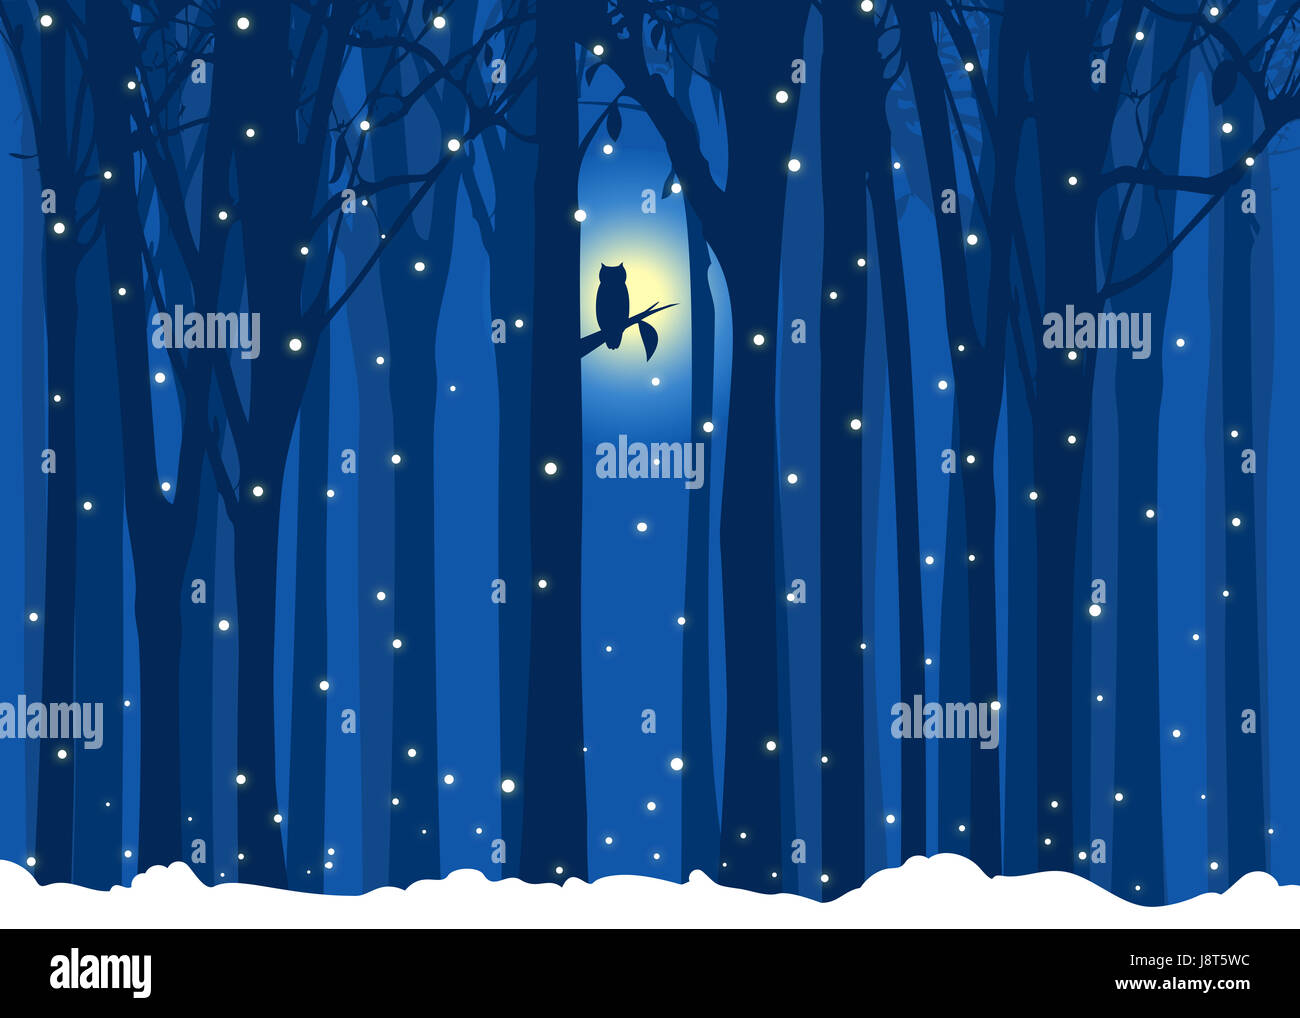 tree, winter, bird, moon, illustration, abstract, owl, forest, blue, leaf, Stock Photo